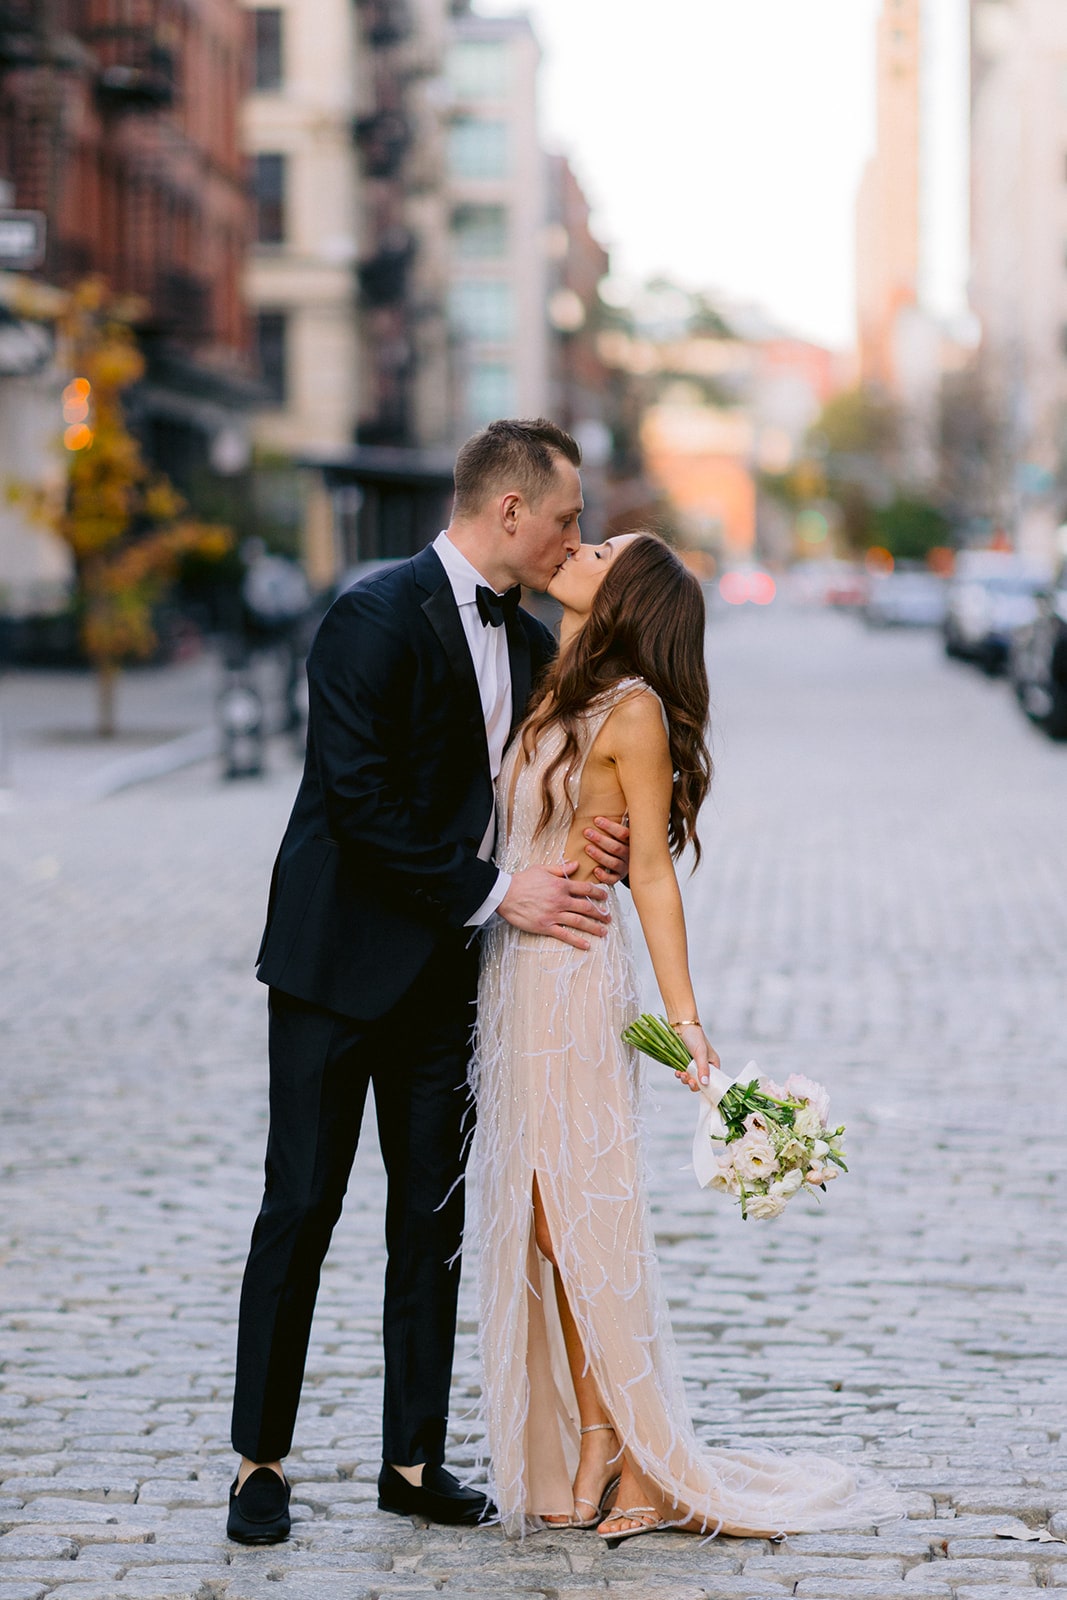 Eisen Stein Bride - Tribeca Rooftop Wedding - Larisa Shorina Photography - Elegant luxury weddings in New York, Italy, Destinations